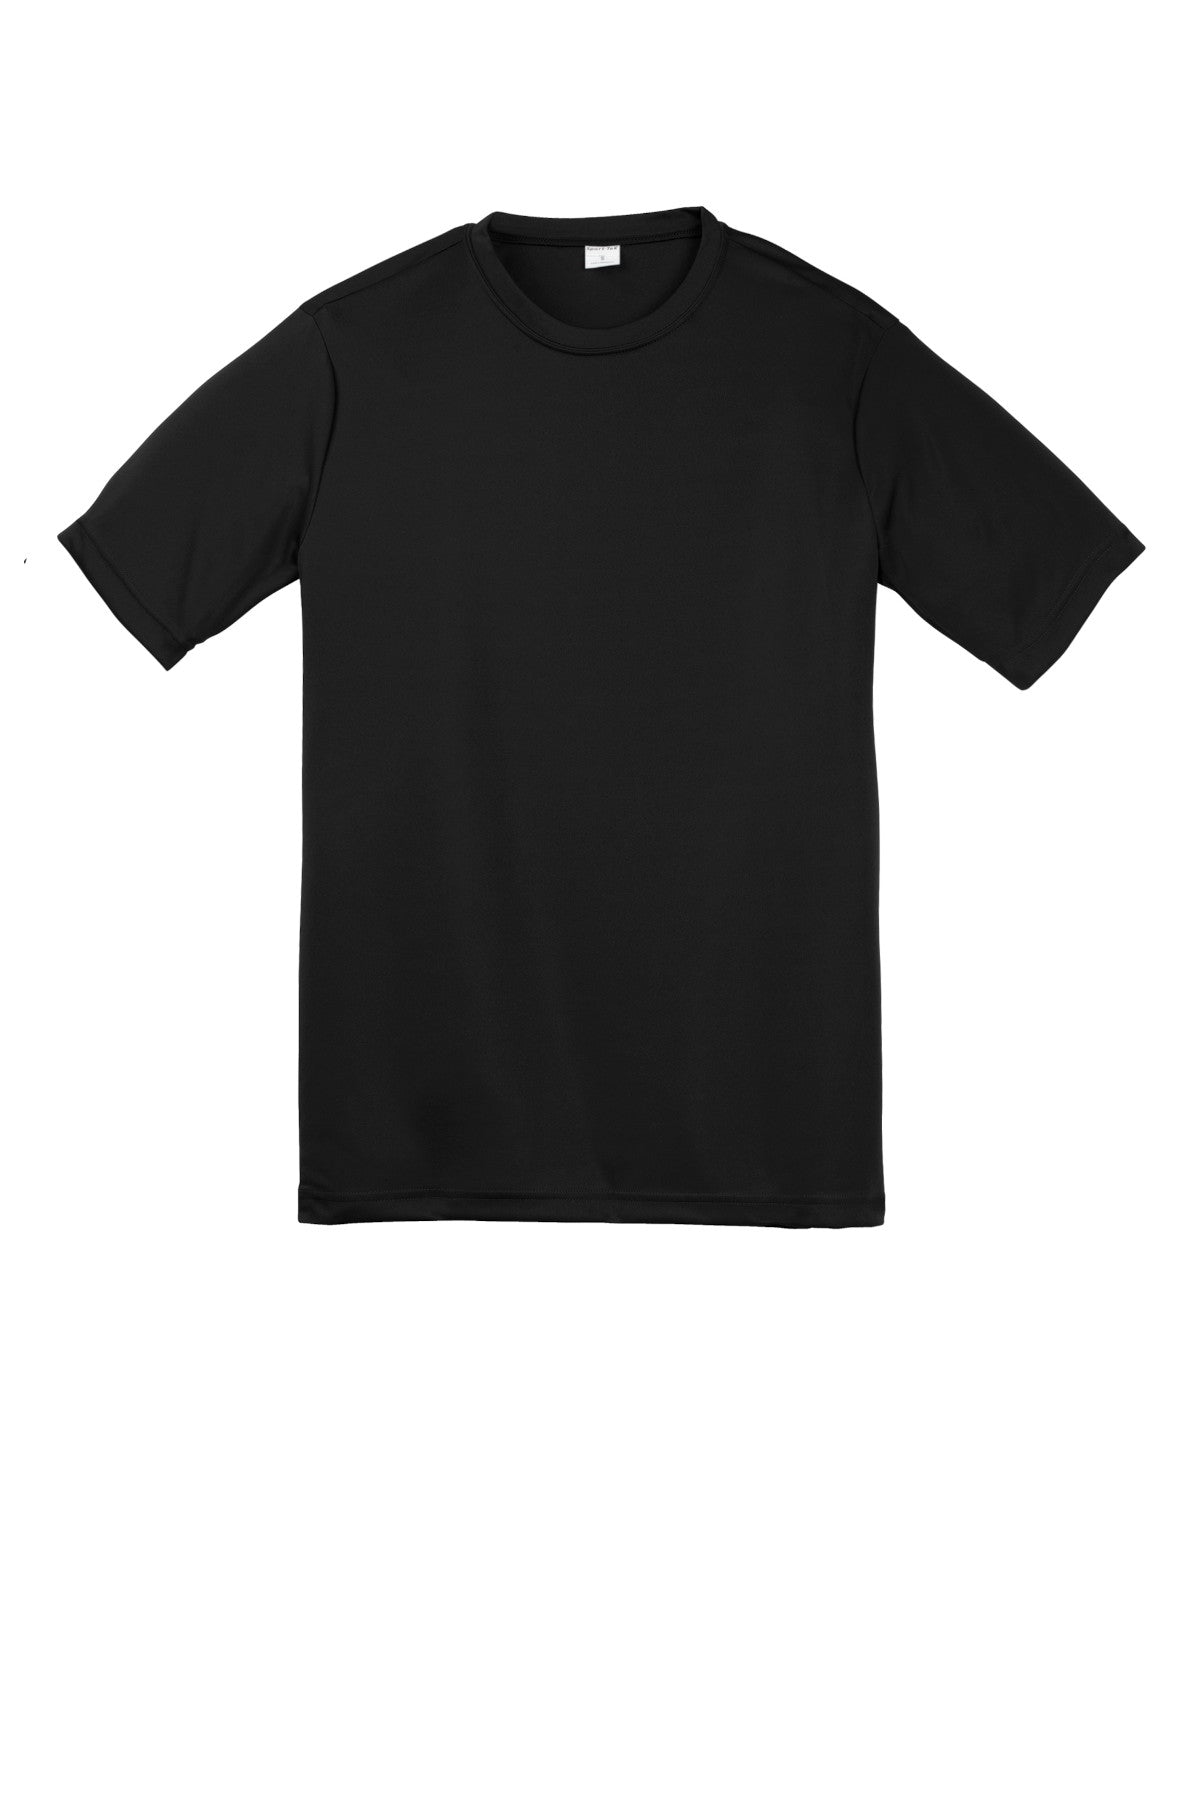 Sport-Tek Yst350 Polyester Youth T-Shirt Yth Small / Black